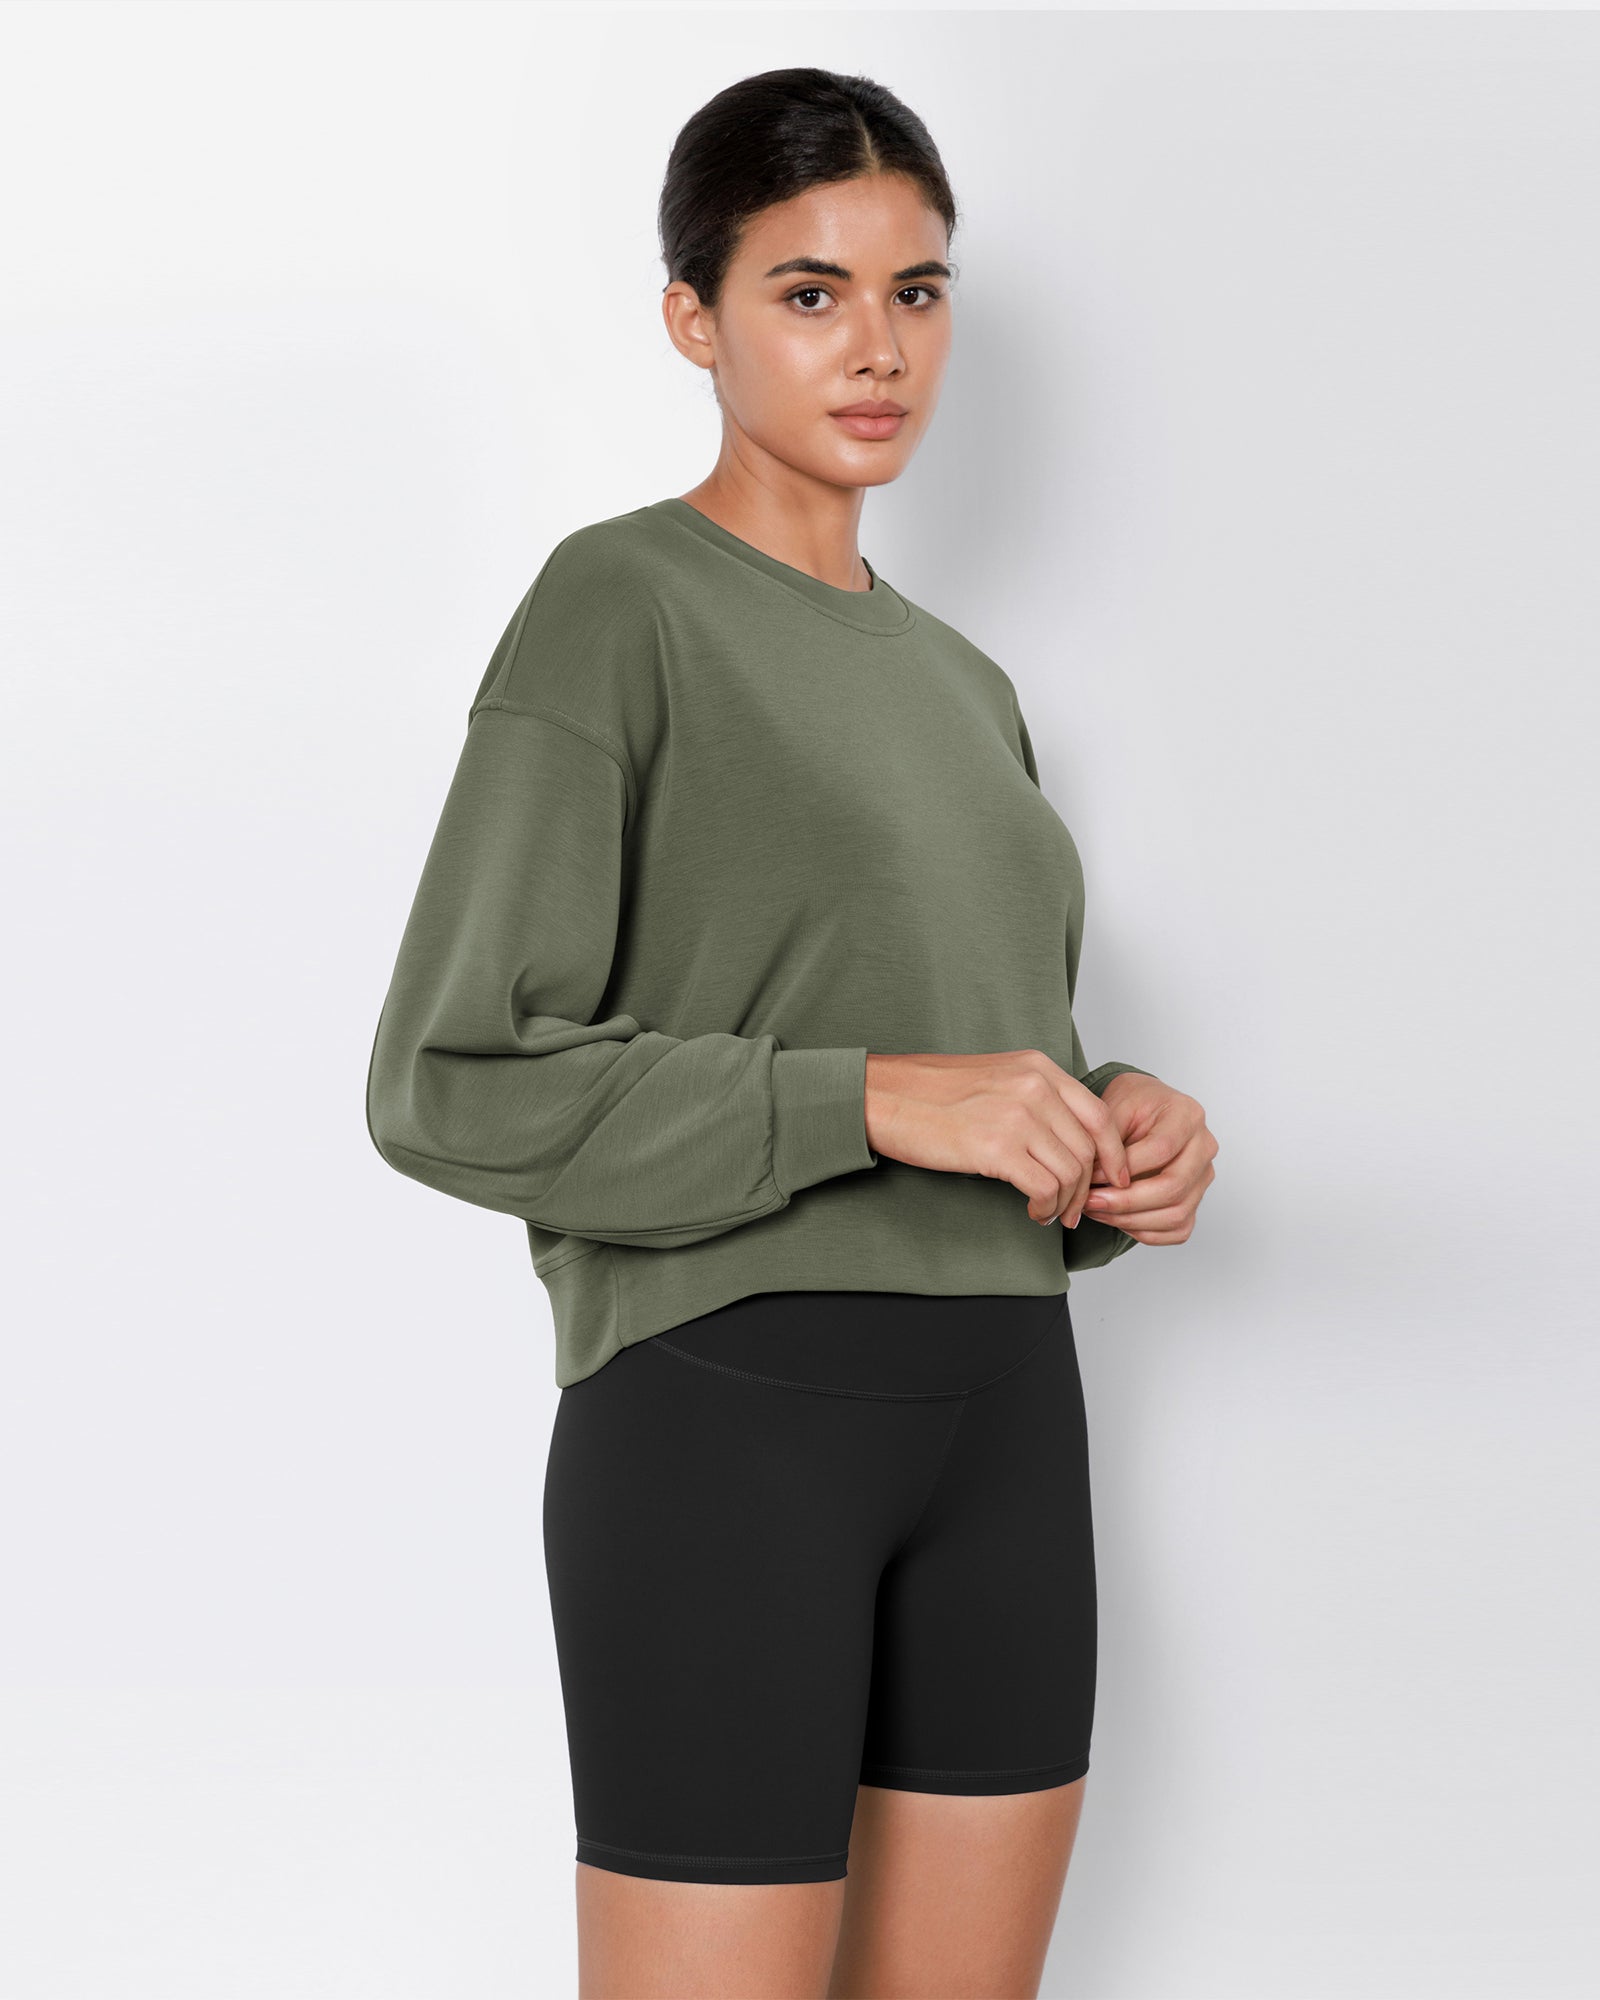 Modal Soft Long Sleeve Cropped Sweatshirts - ododos